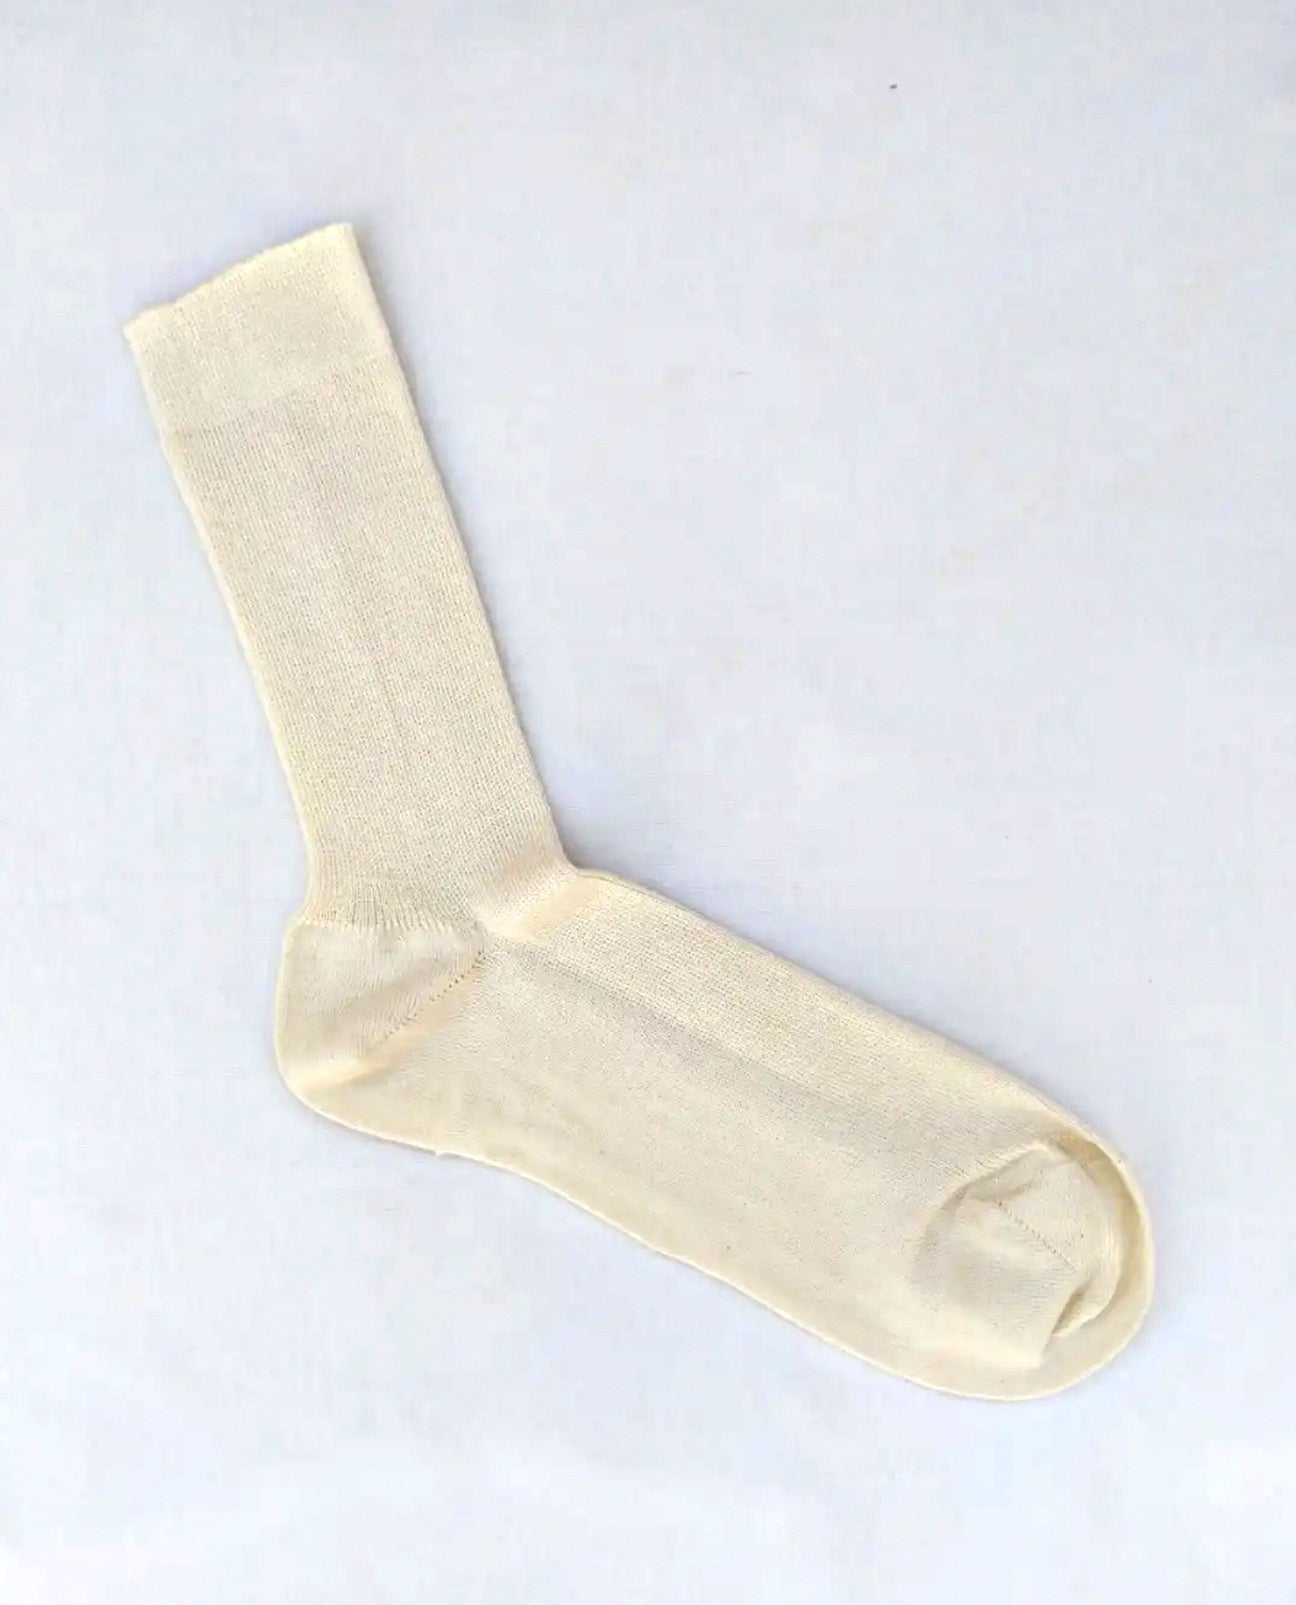 Laura Undyed Organic Cotton Socks in Ecru